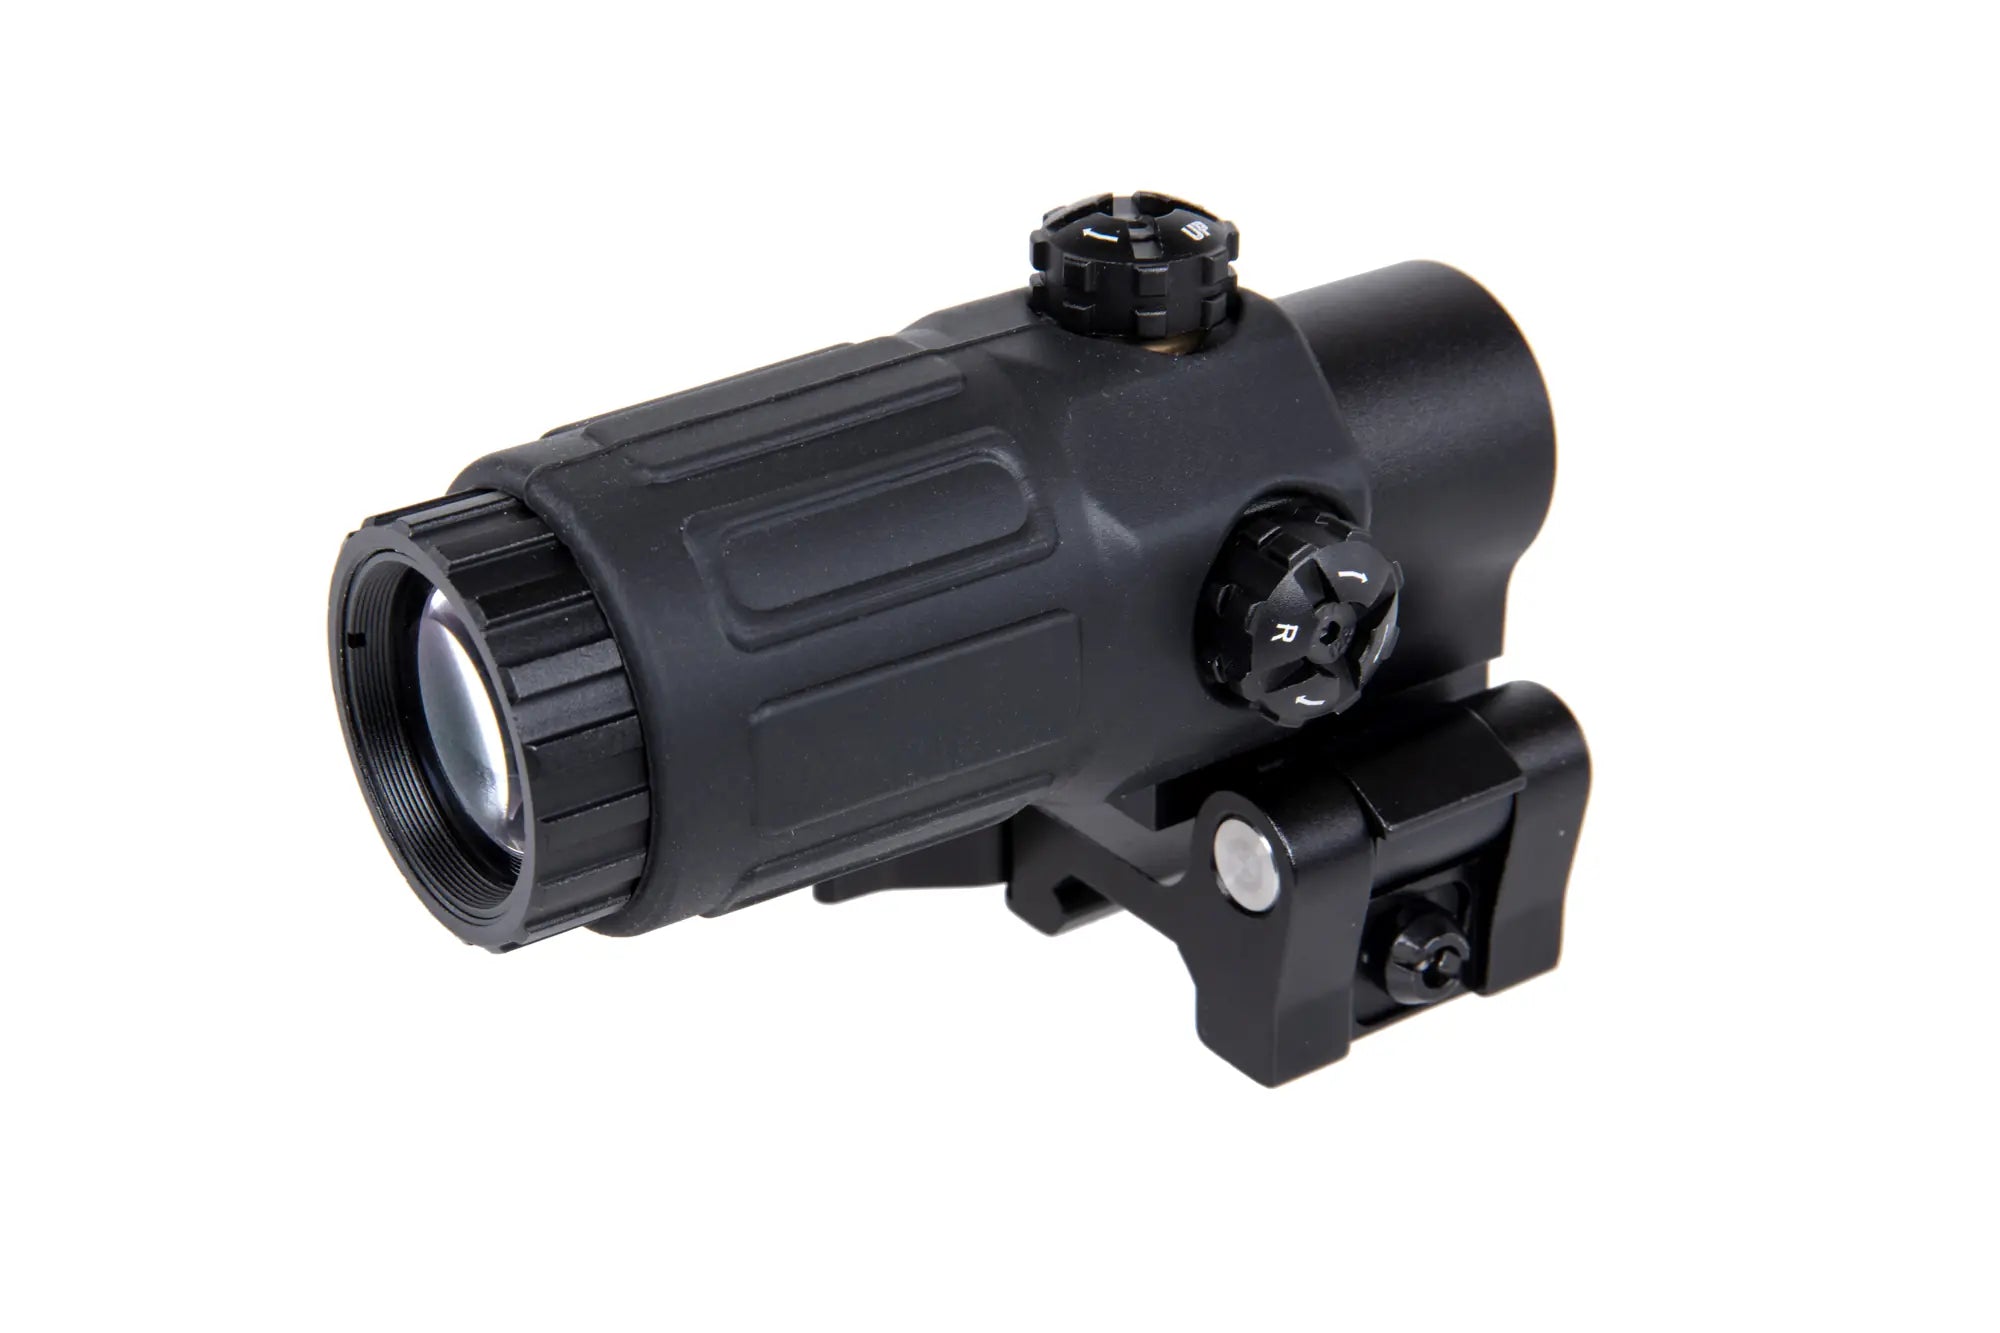 Magnifier replica scope type G33 Black-1